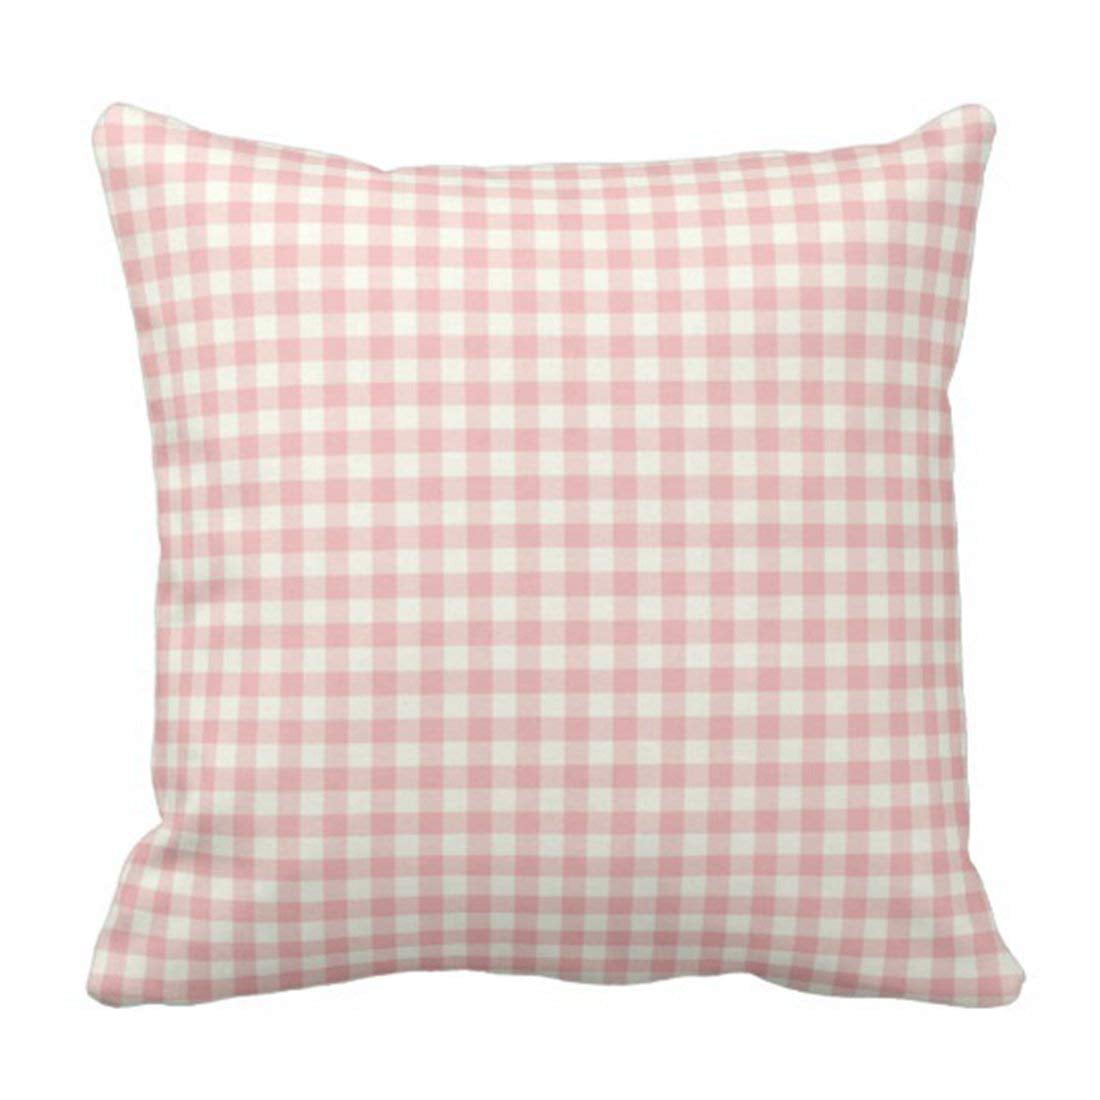 BPBOP Pink Gingham Pattern Pillowcase Cover 18x18 inch - Walmart.com ...